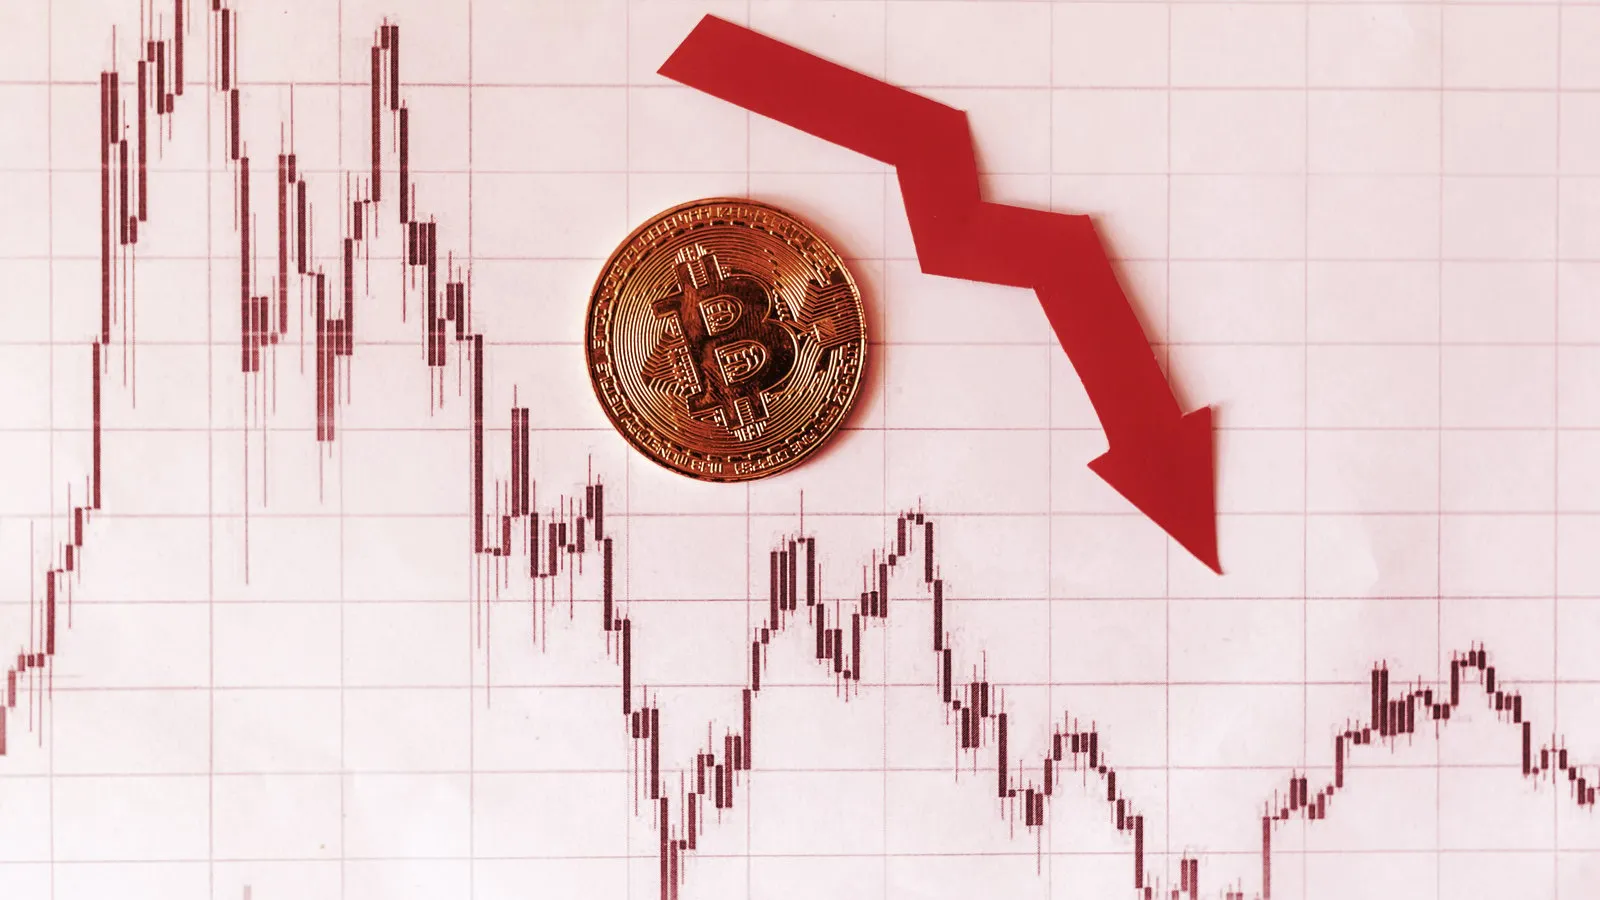 Bitcoin price falls again. Image: Shutterstock